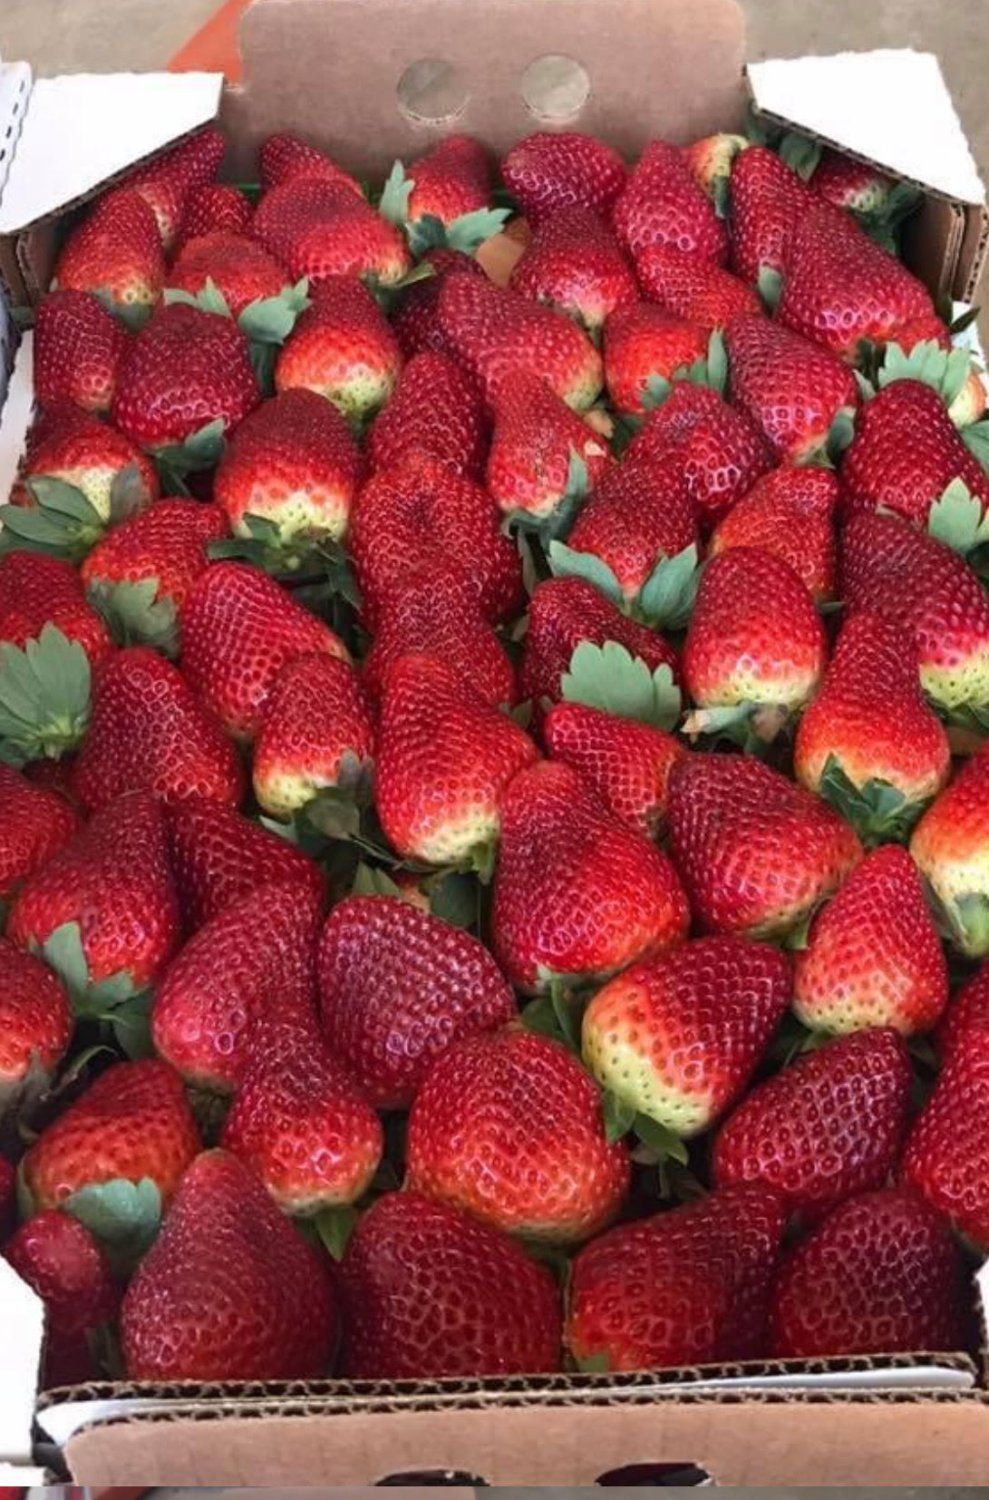 Strawberries Are Ripe!